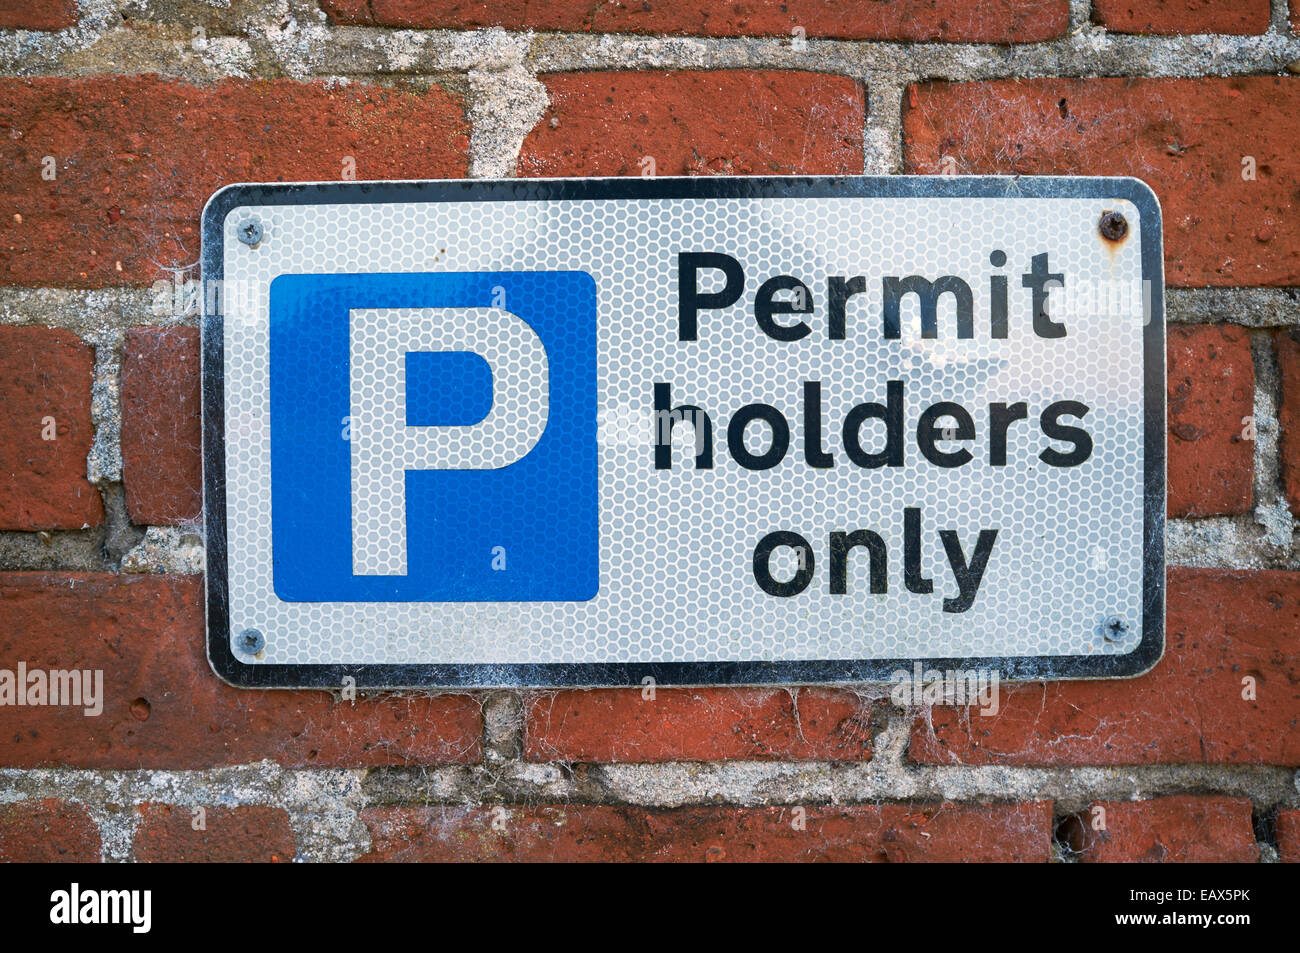 https://c8.alamy.com/comp/EAX5PK/disabled-parking-permit-holders-only-sign-EAX5PK.jpg